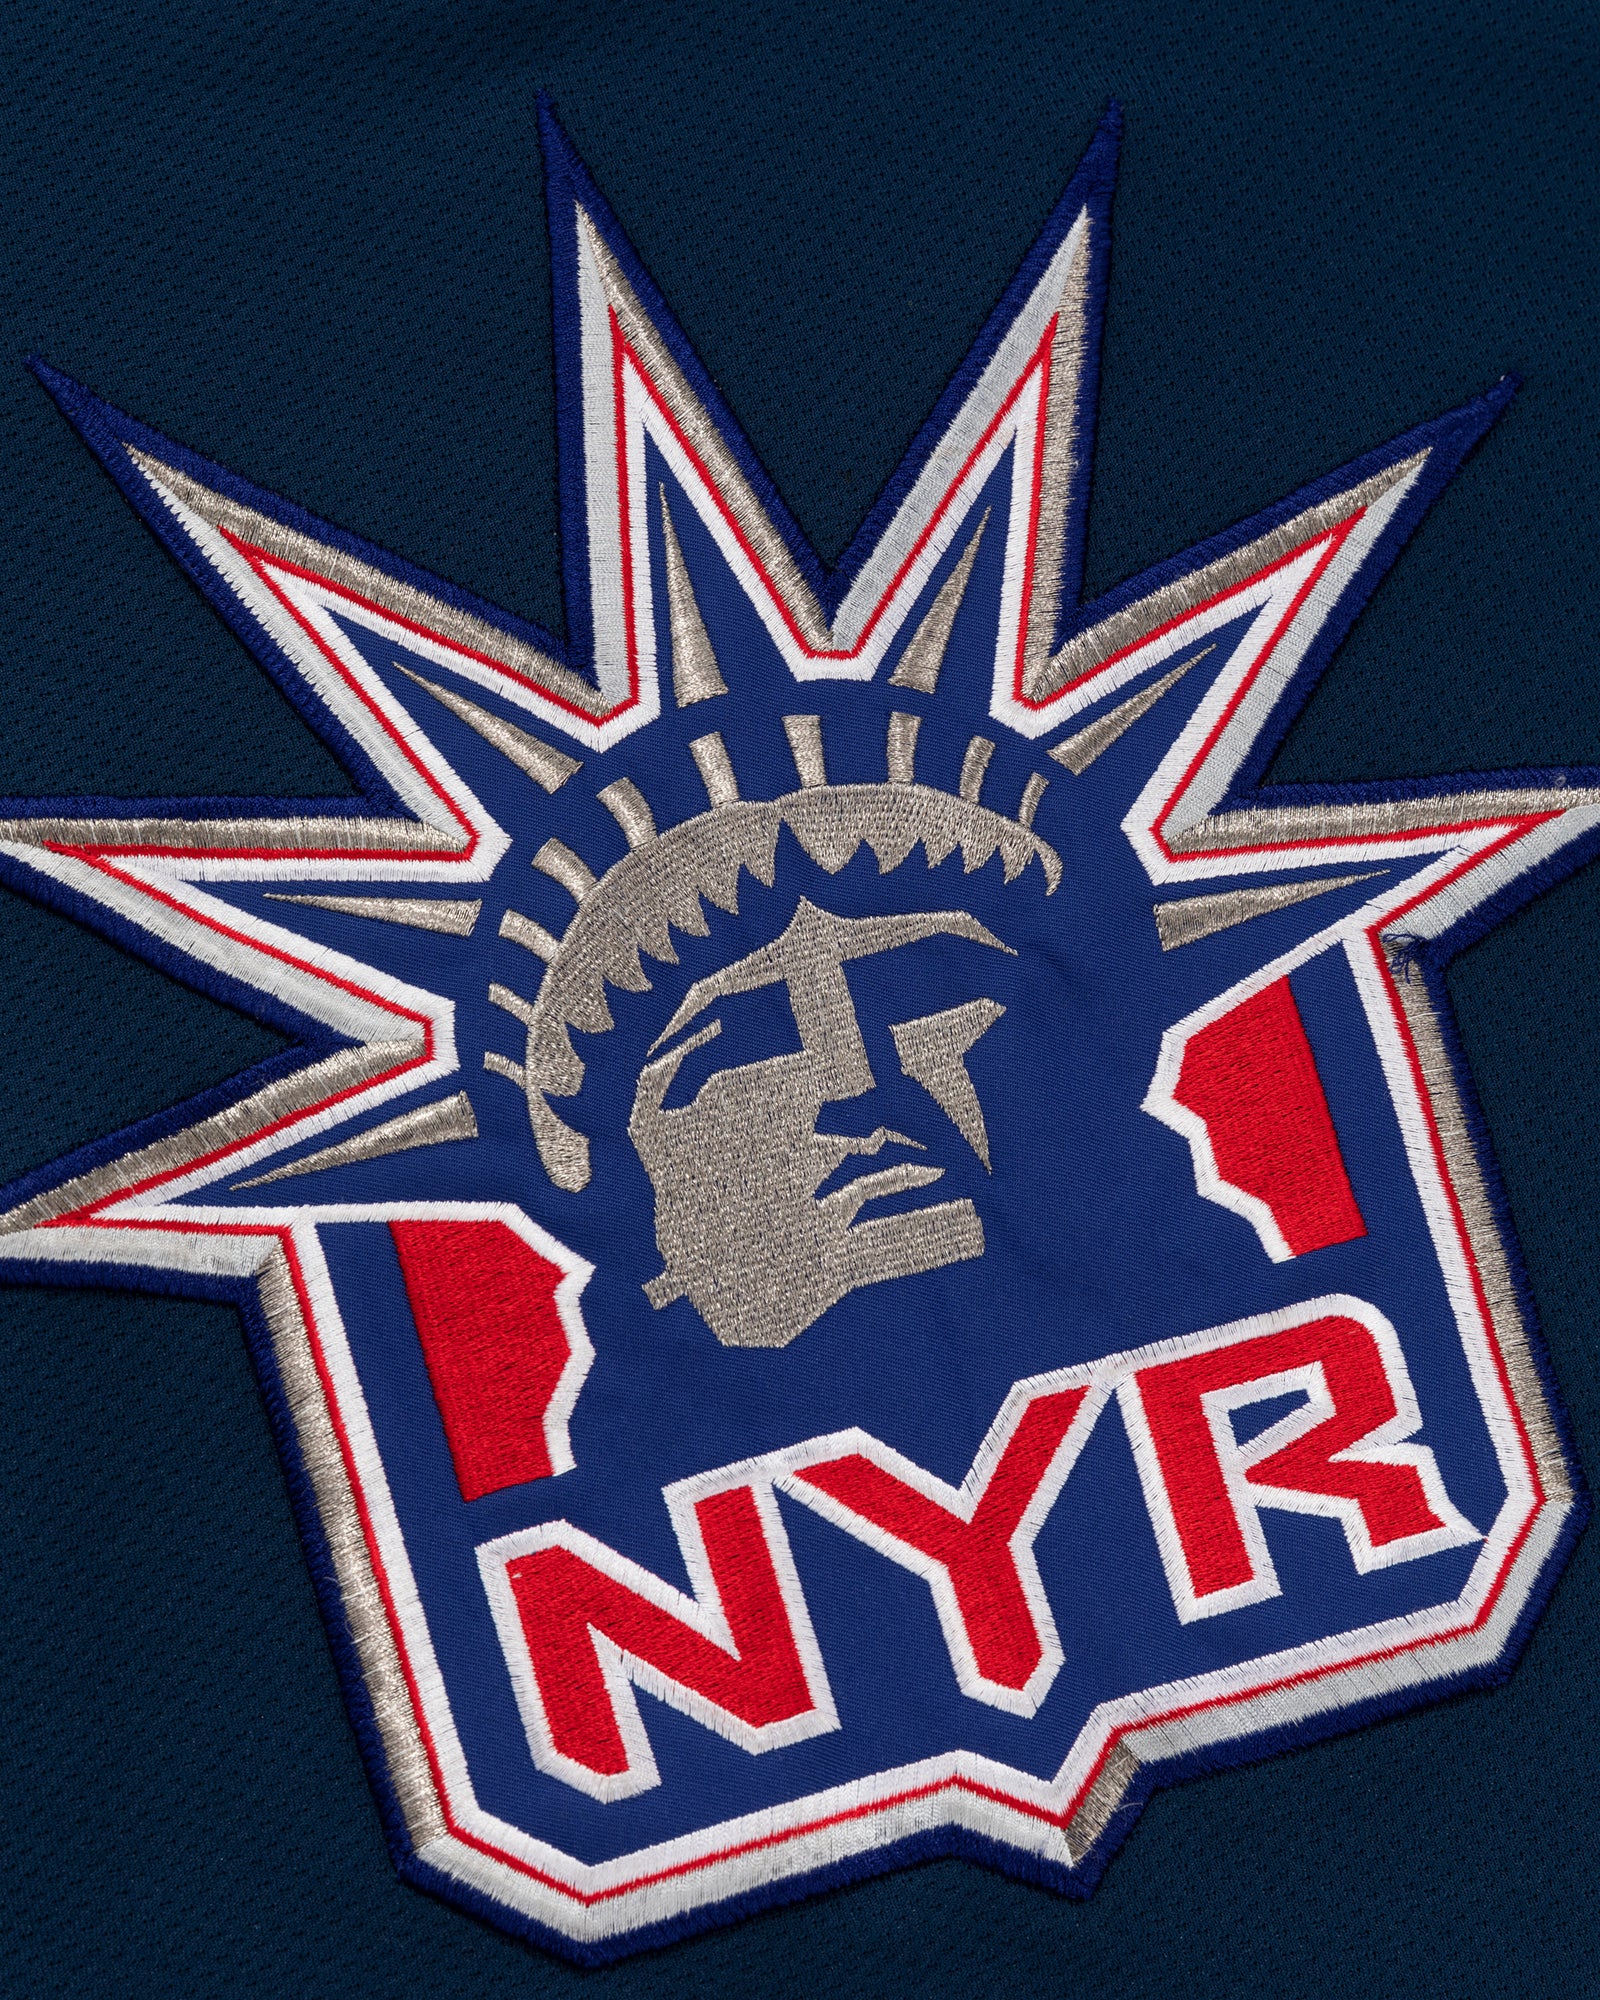 The Liberty Jerseys Return, New York Rangers